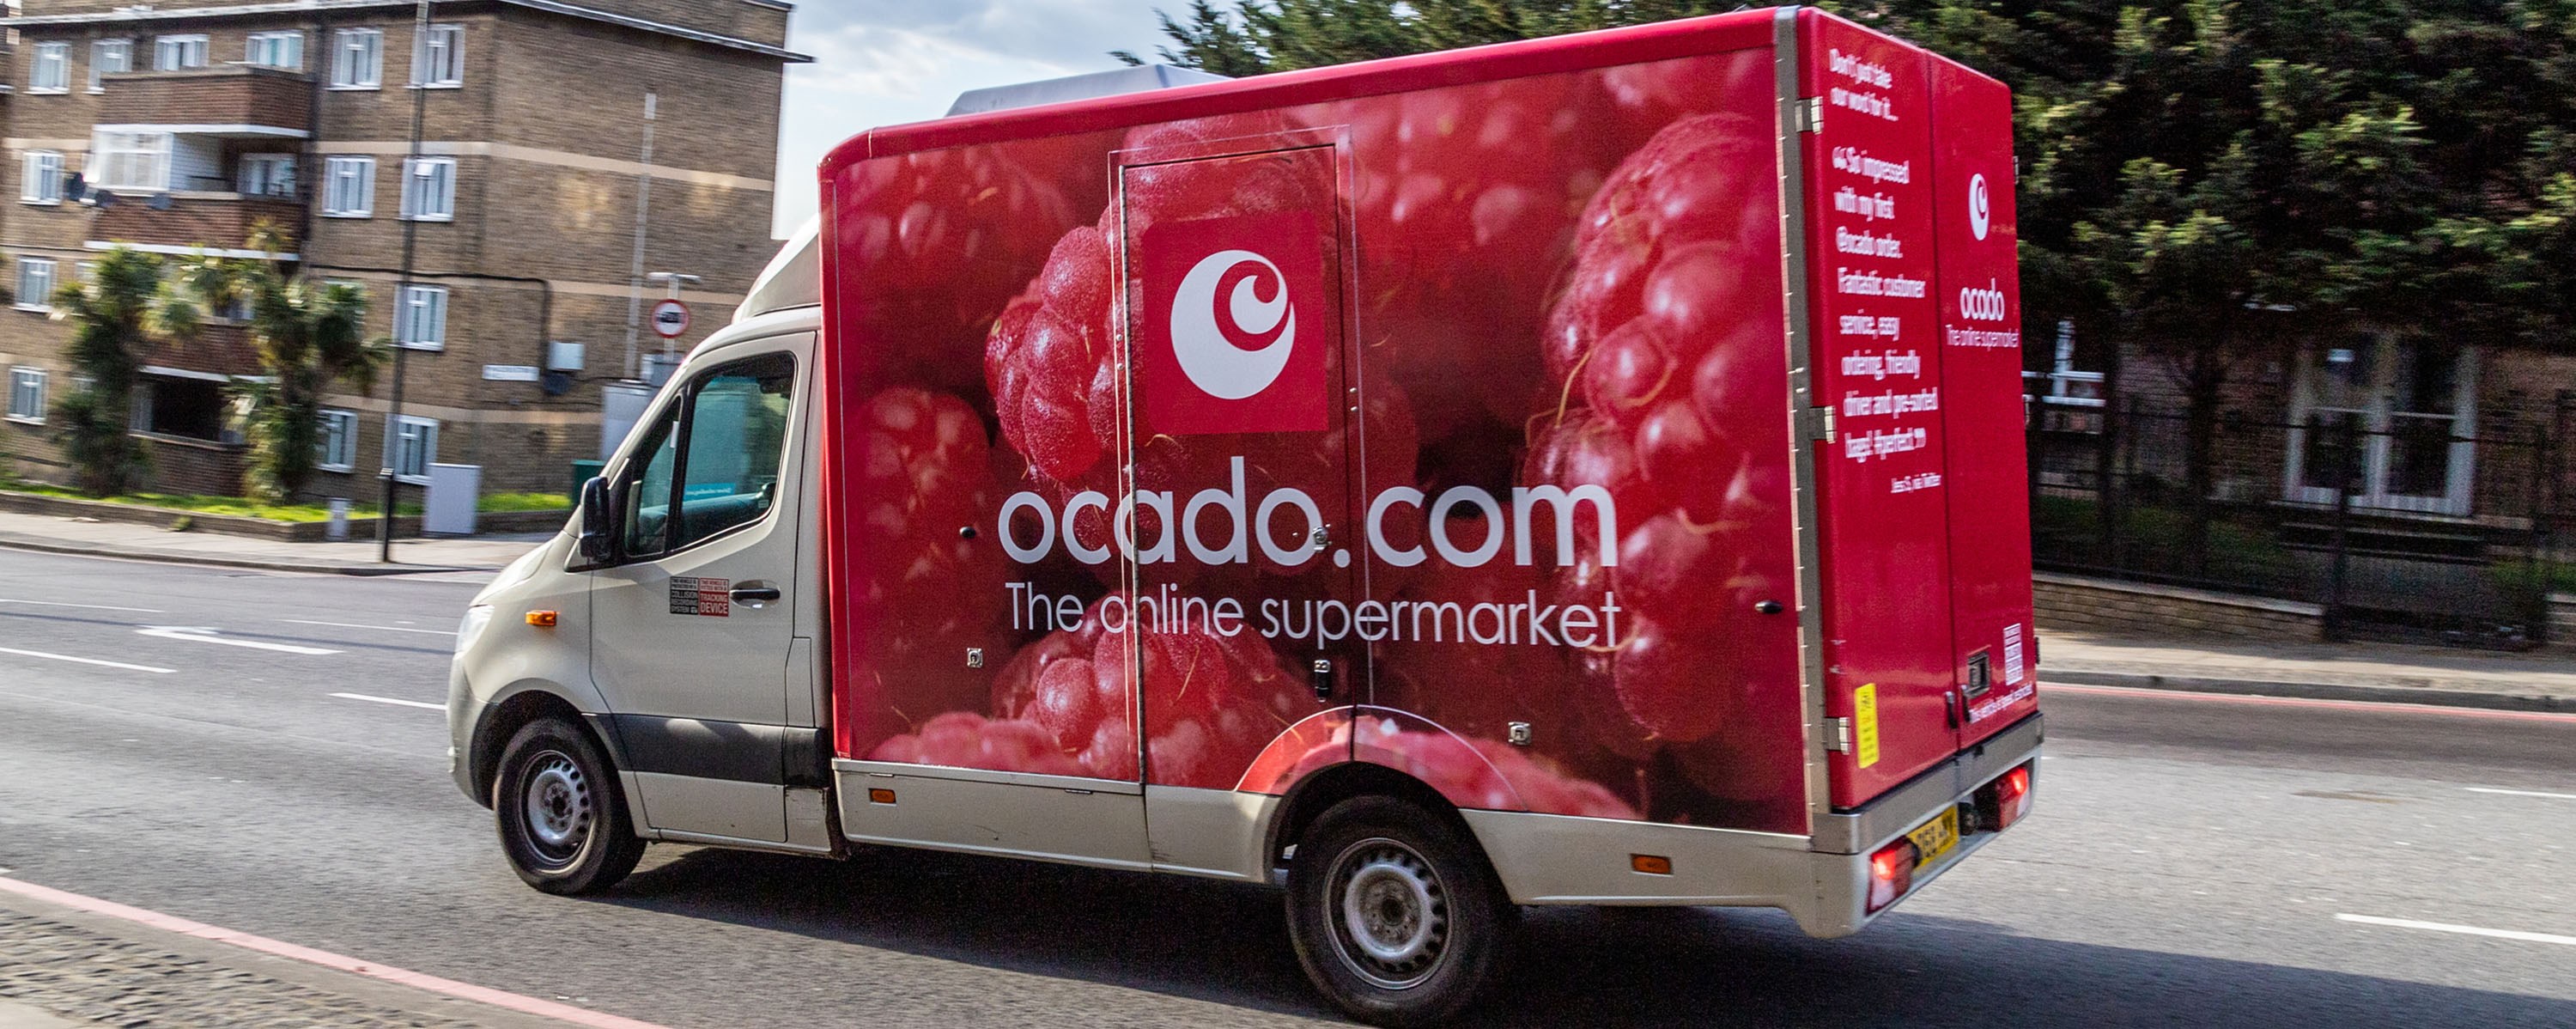 Ocado truck. Photo: Mikecphoto/Dreamstime